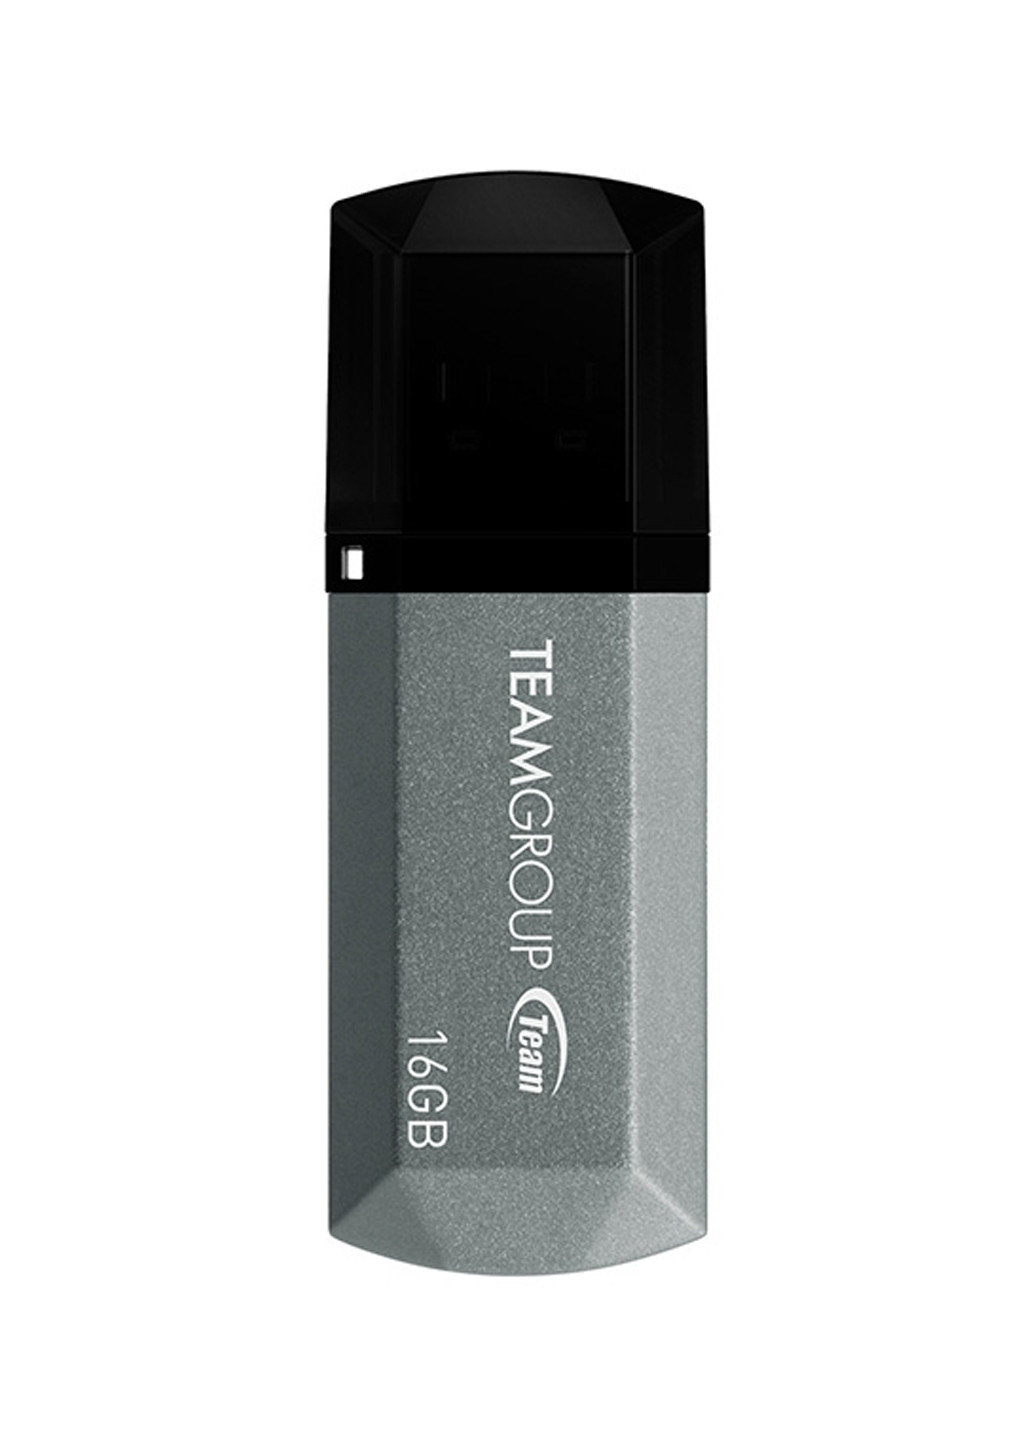 Флеш память USB C153 16GB Silver (TC15316GS01) Team флеш память usb team c153 16gb silver (tc15316gs01) (134201651)